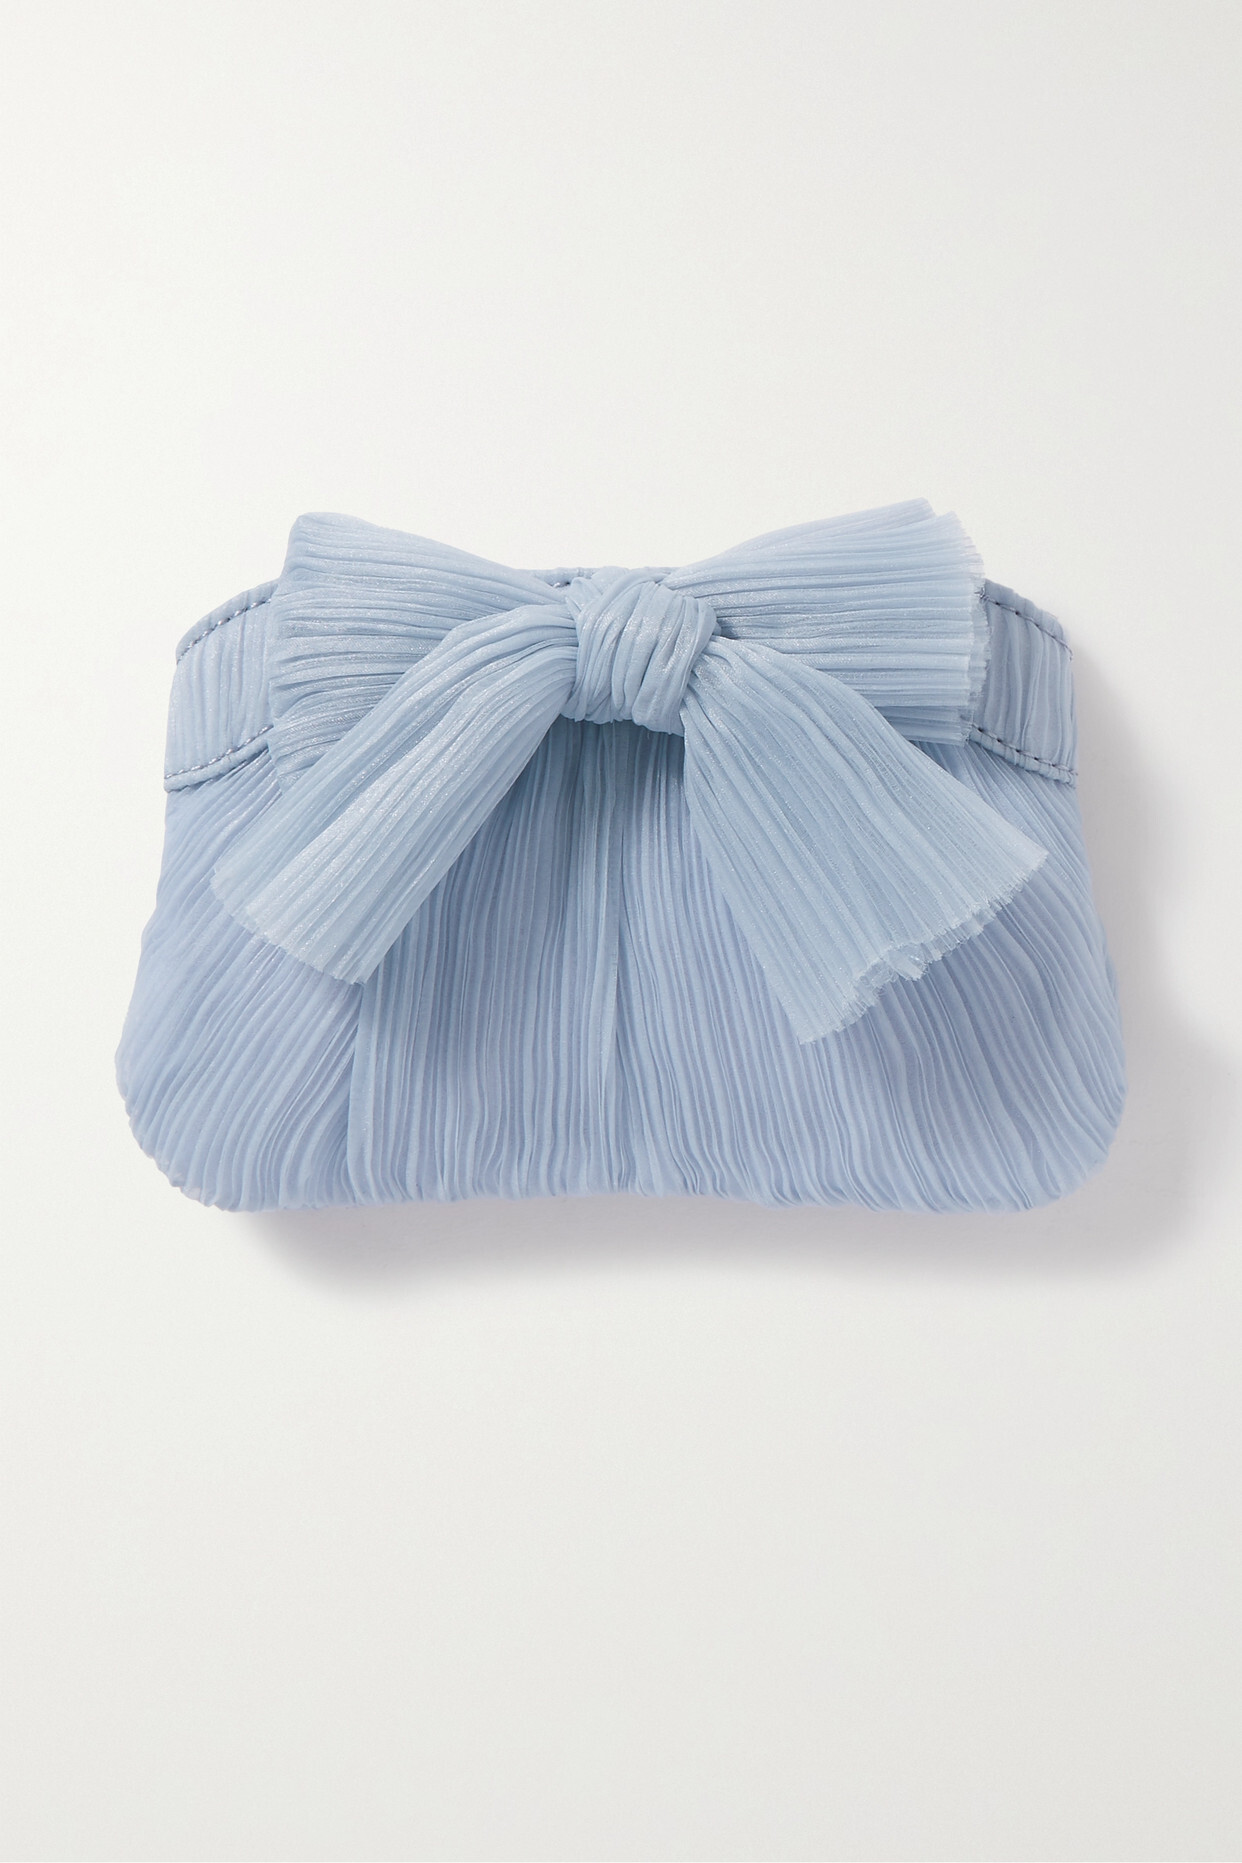 Loeffler Randall - Rochelle Bow-embellished Plissé-organza Clutch - Blue